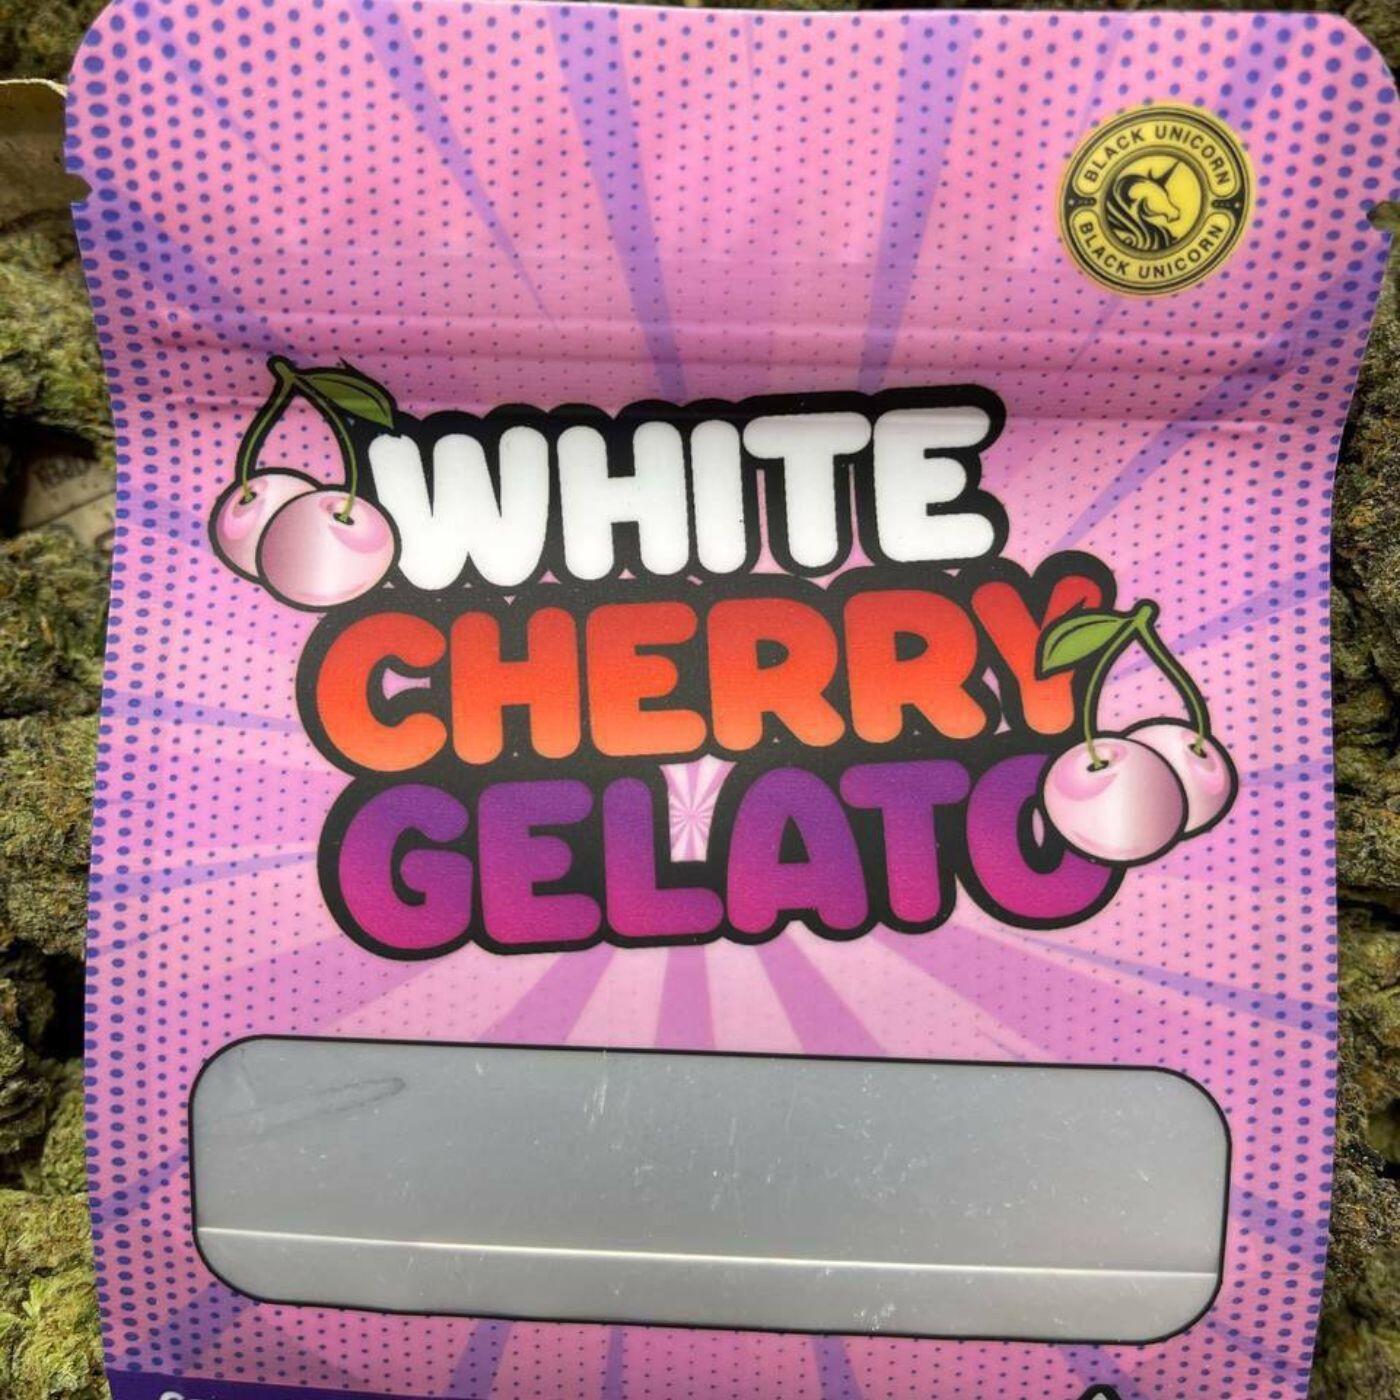 white cherry gelato, white cherry gelato strain, white cherry gelato backpackboyz, white cherry gelato weed, white cherry gelato strain allbud, white cherry gelato strain,